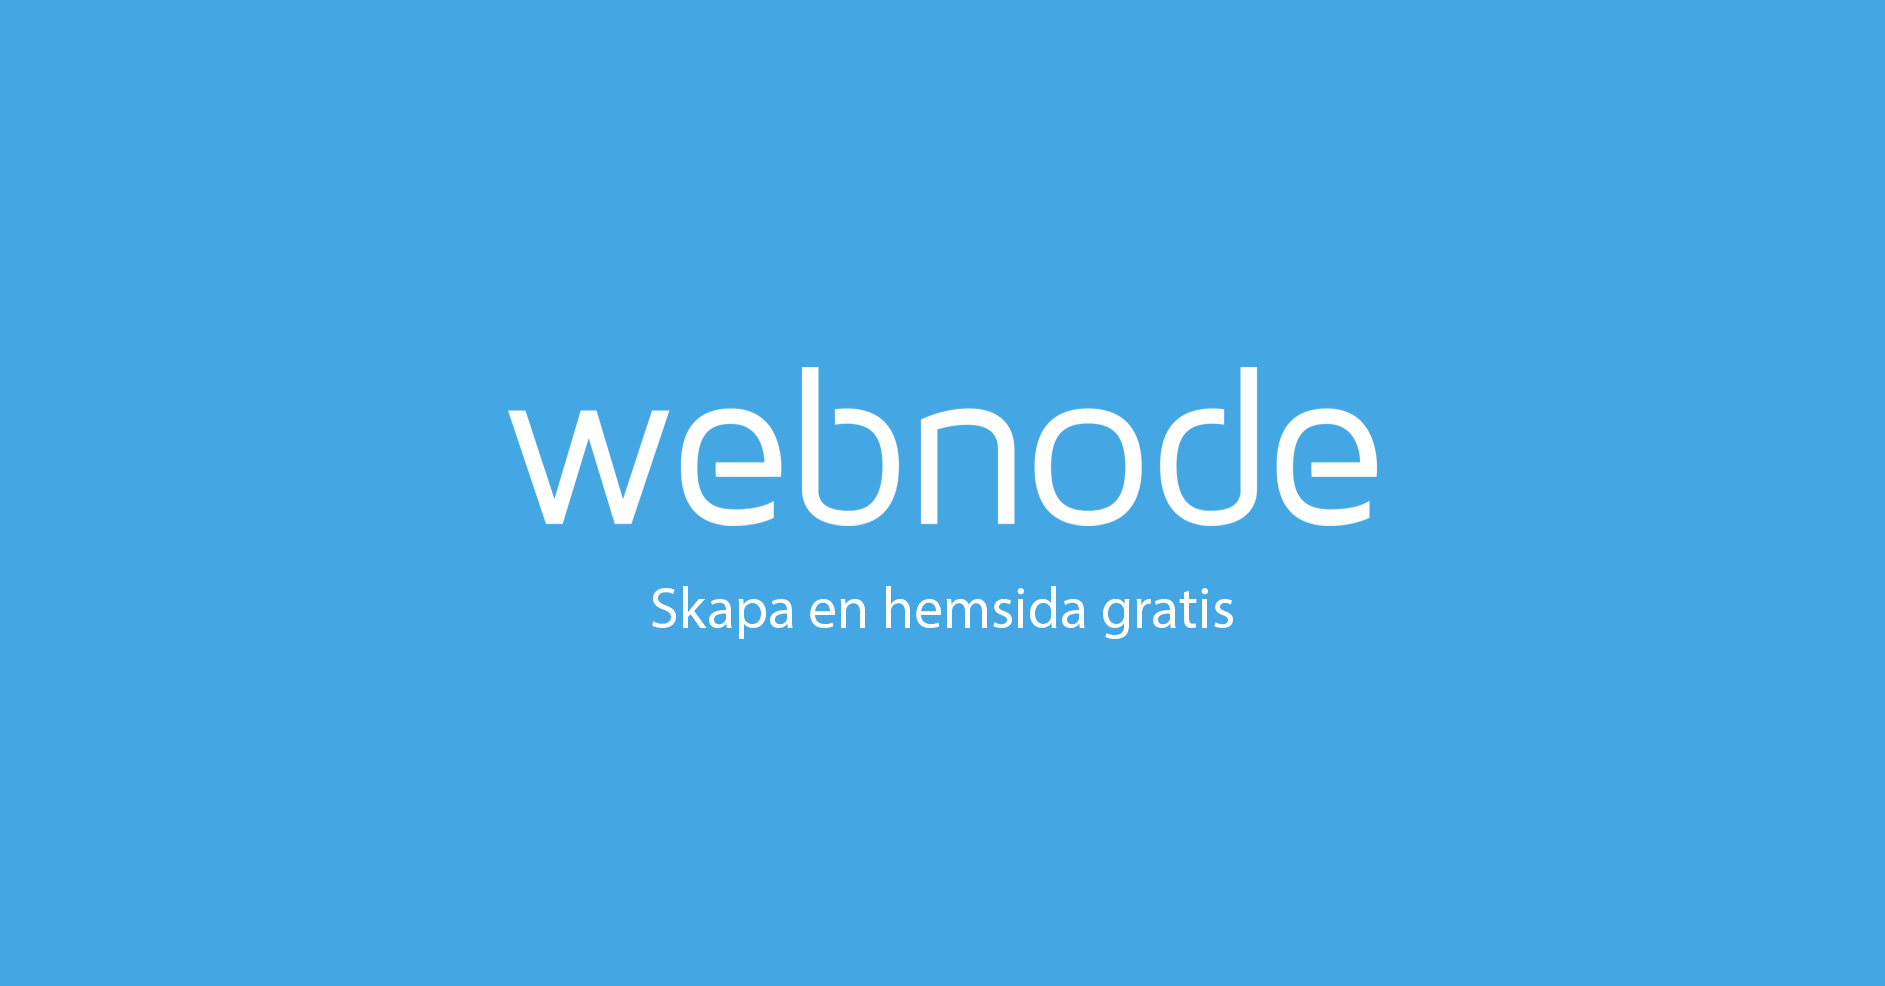 Logga in - Webnode